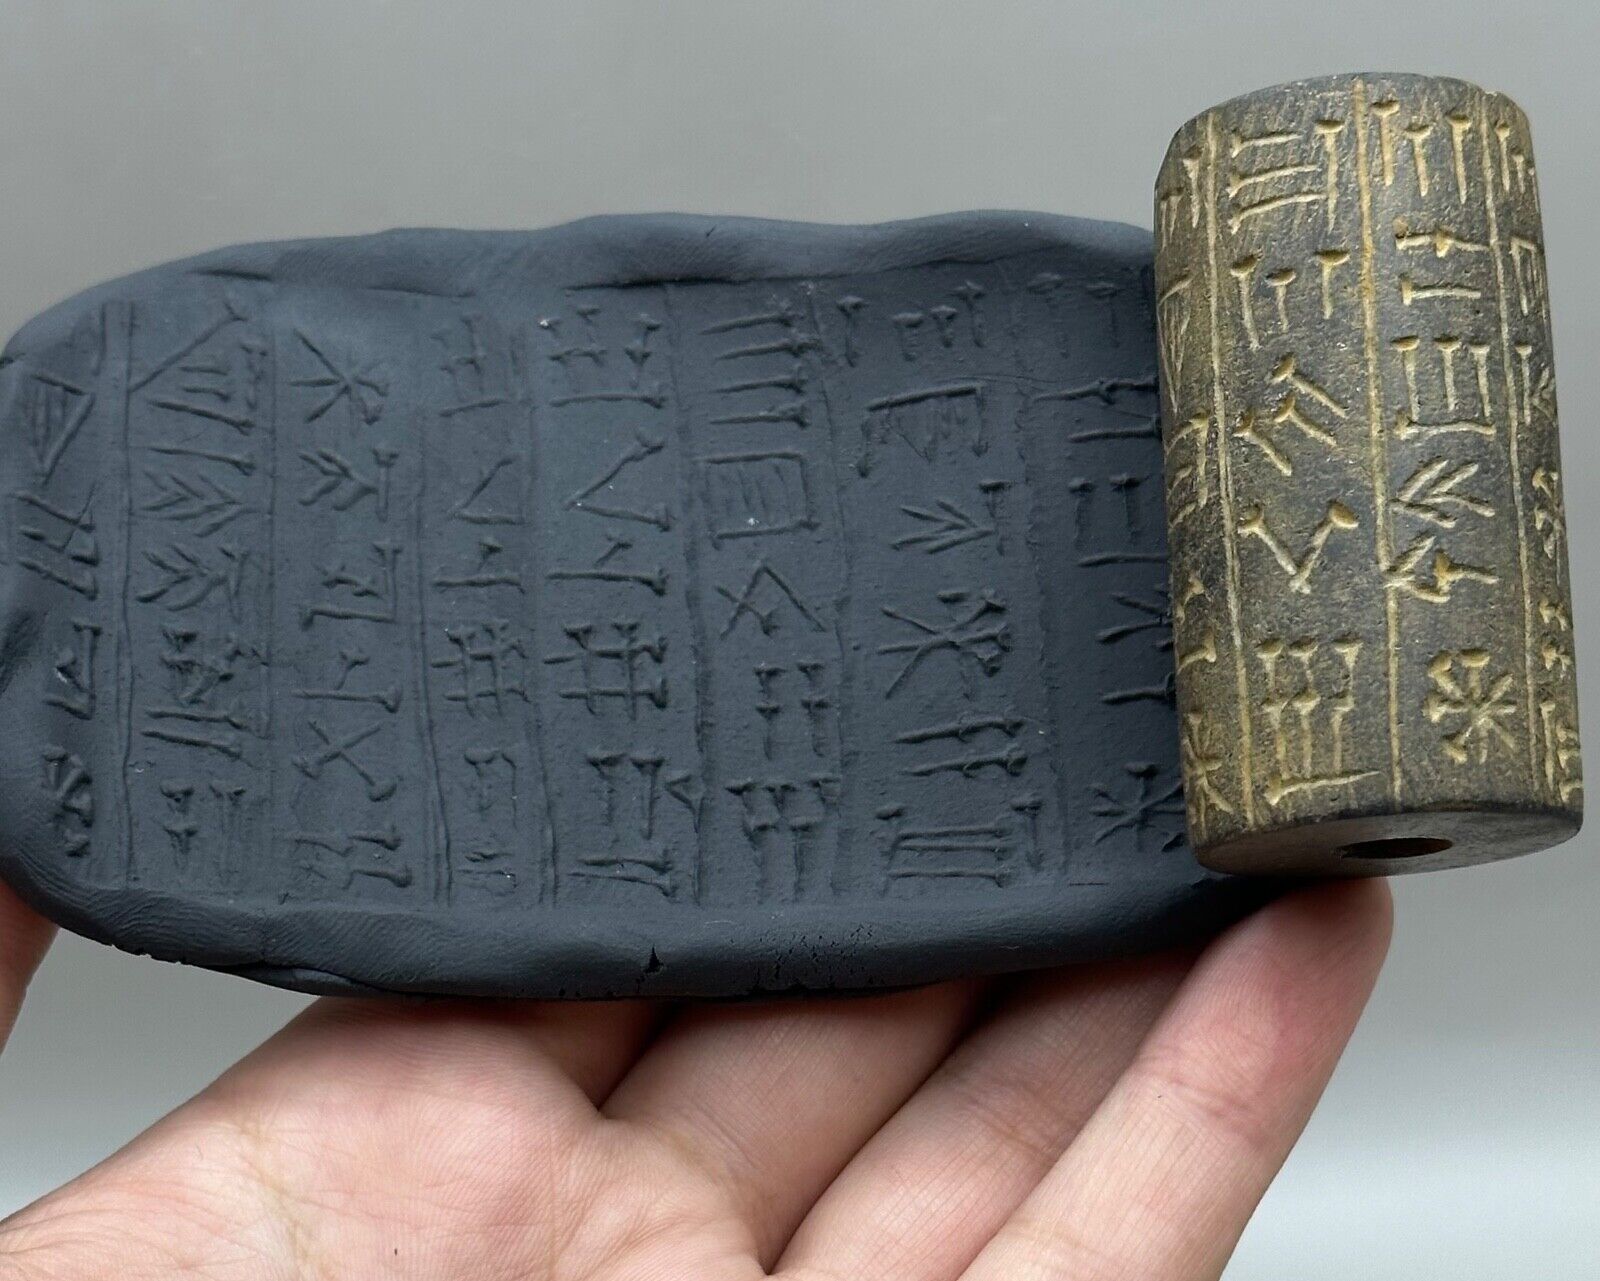 Very Unique Ancient Near Eastern Early Civilization Writing Intaglio Barrel Seal